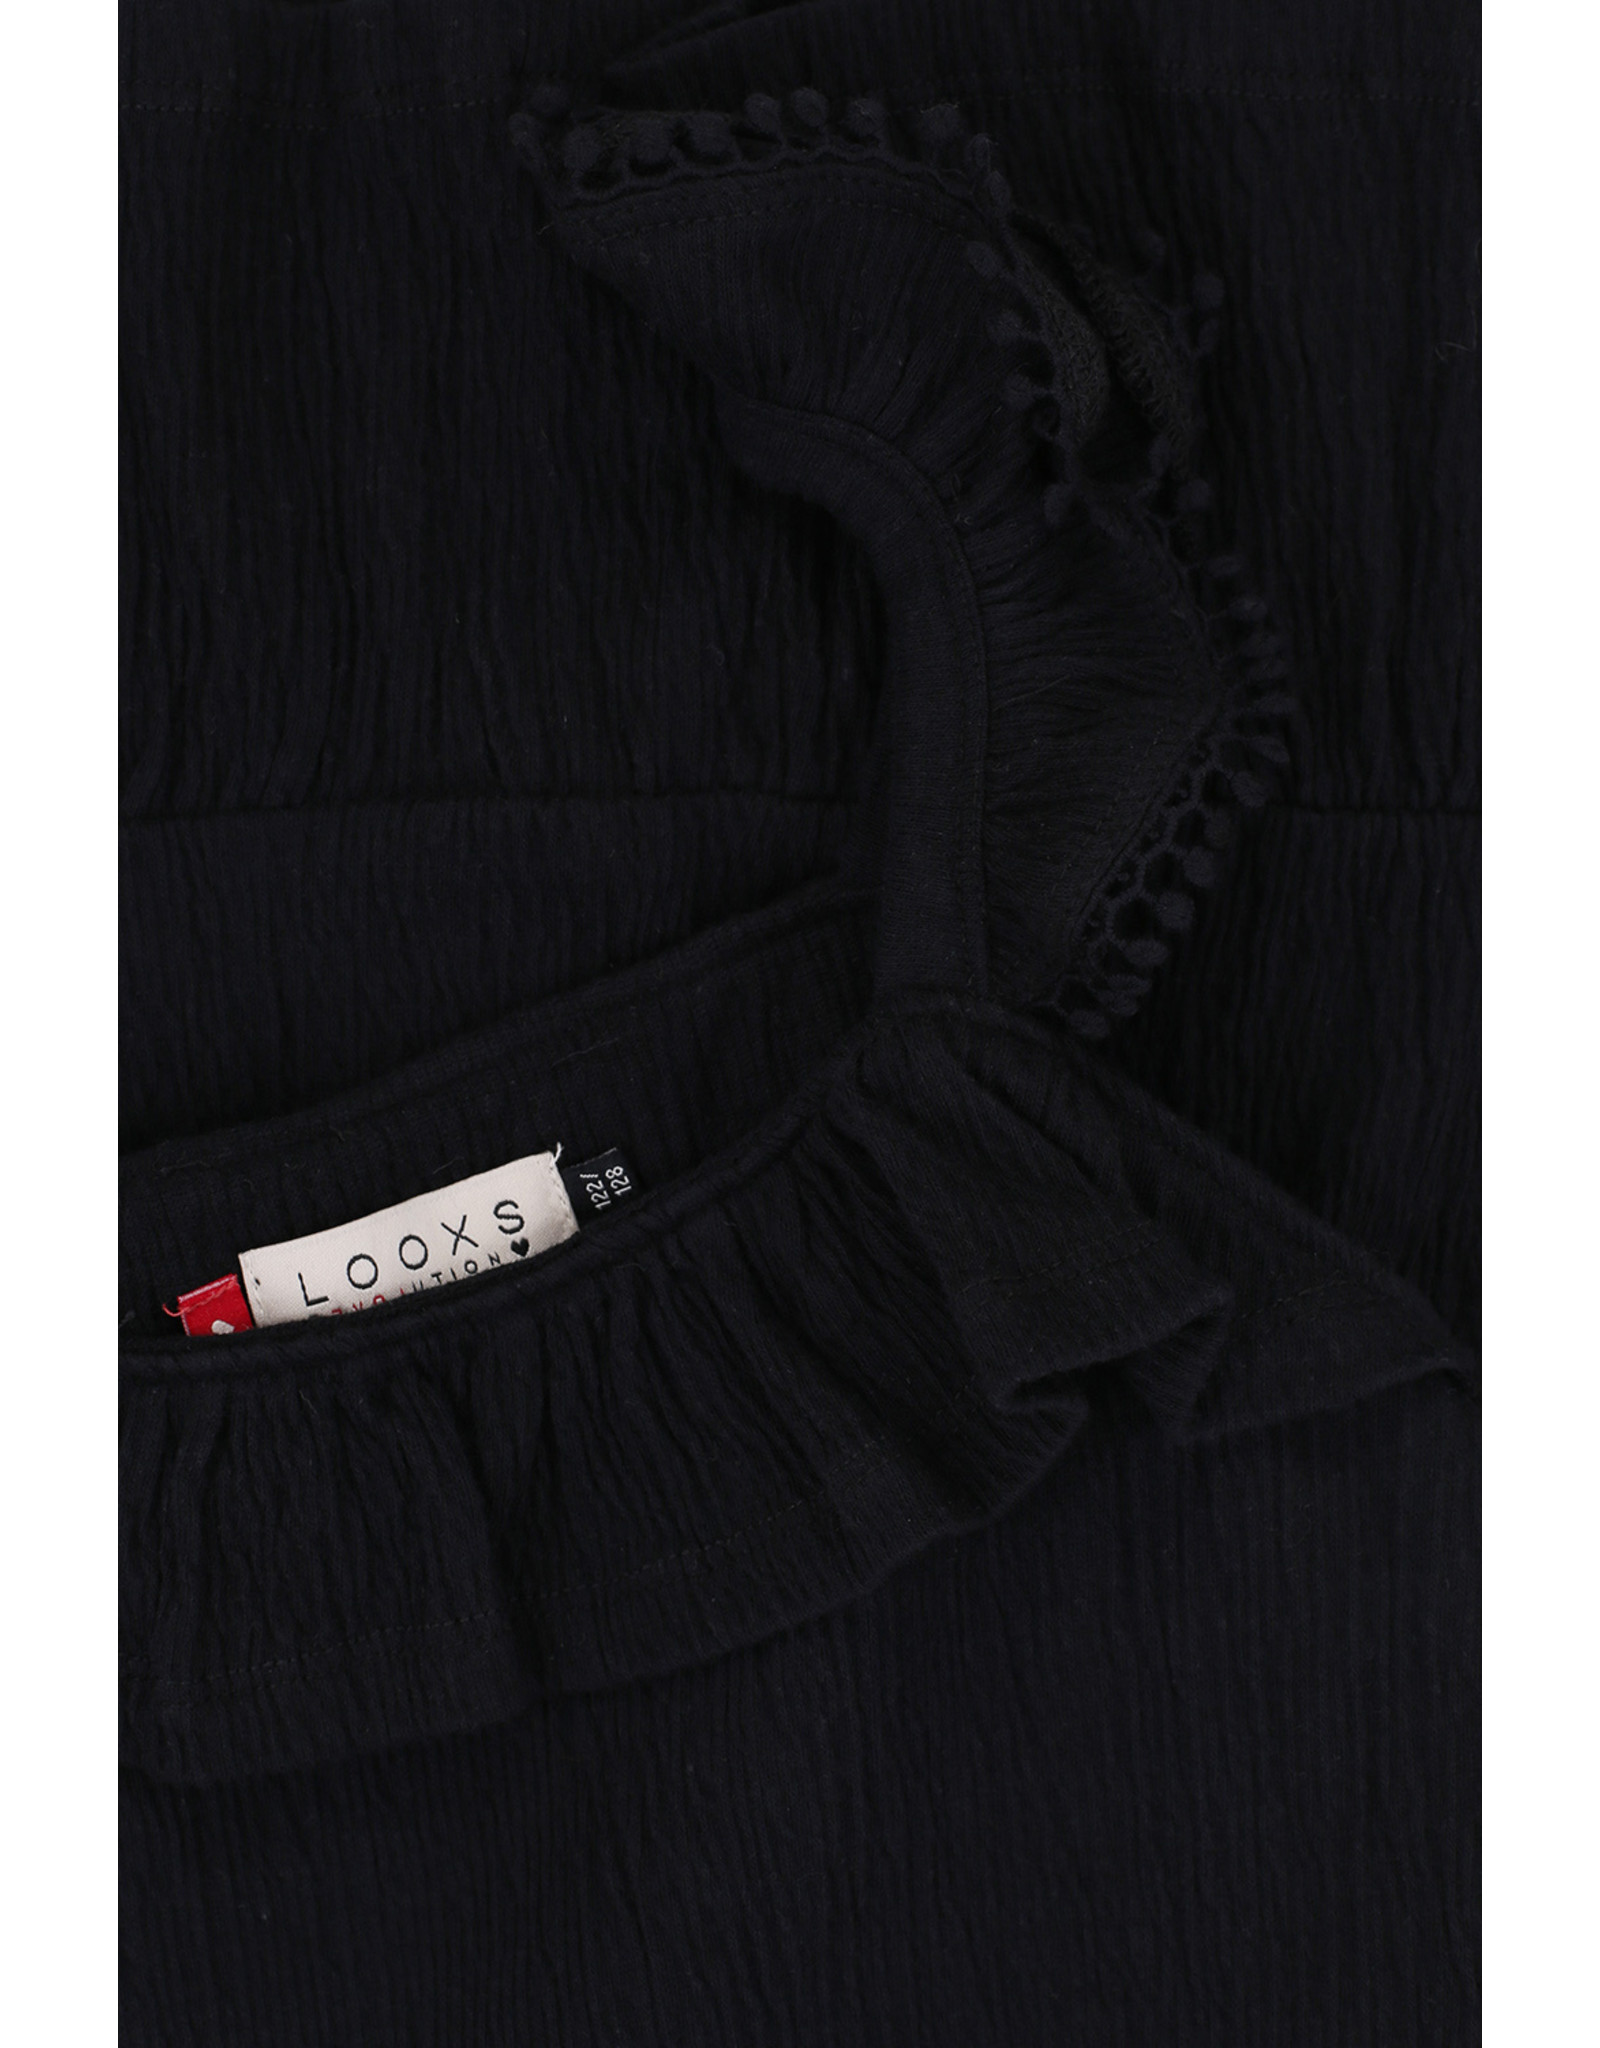 LOOXS Little Dress Dress Black